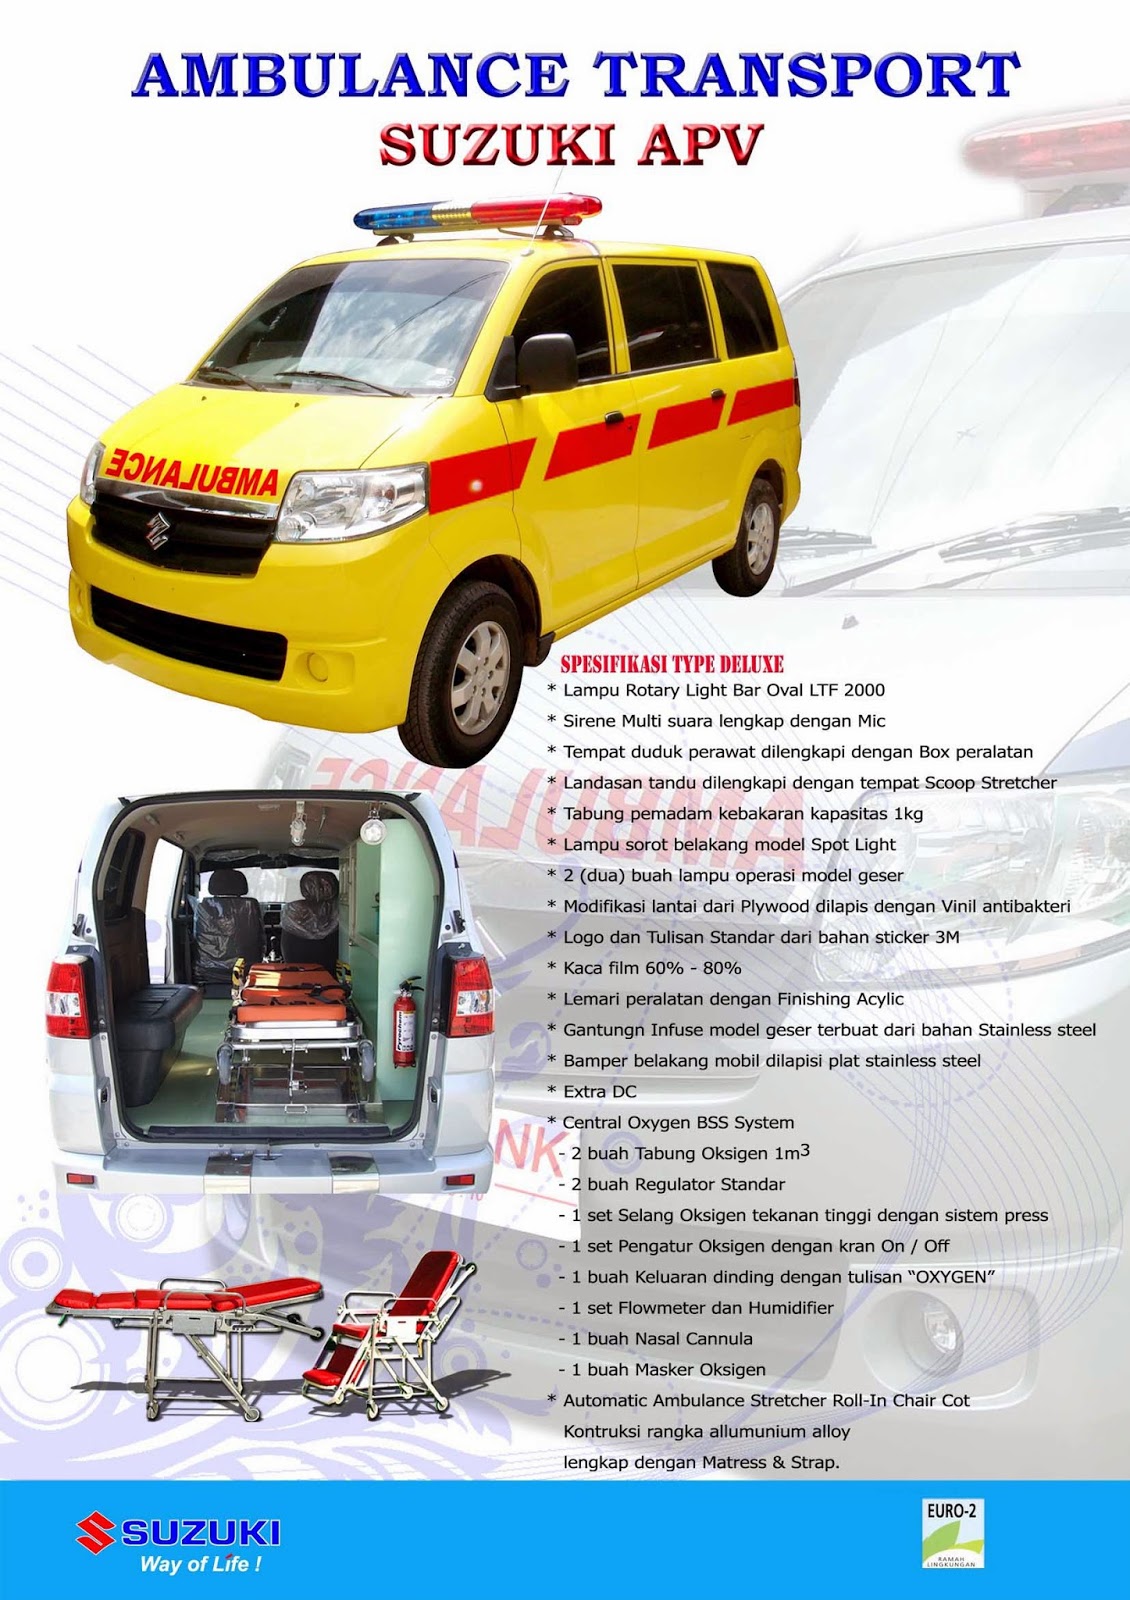 AMBULANCE INDONESIA emergency air ambulance: Supplier 